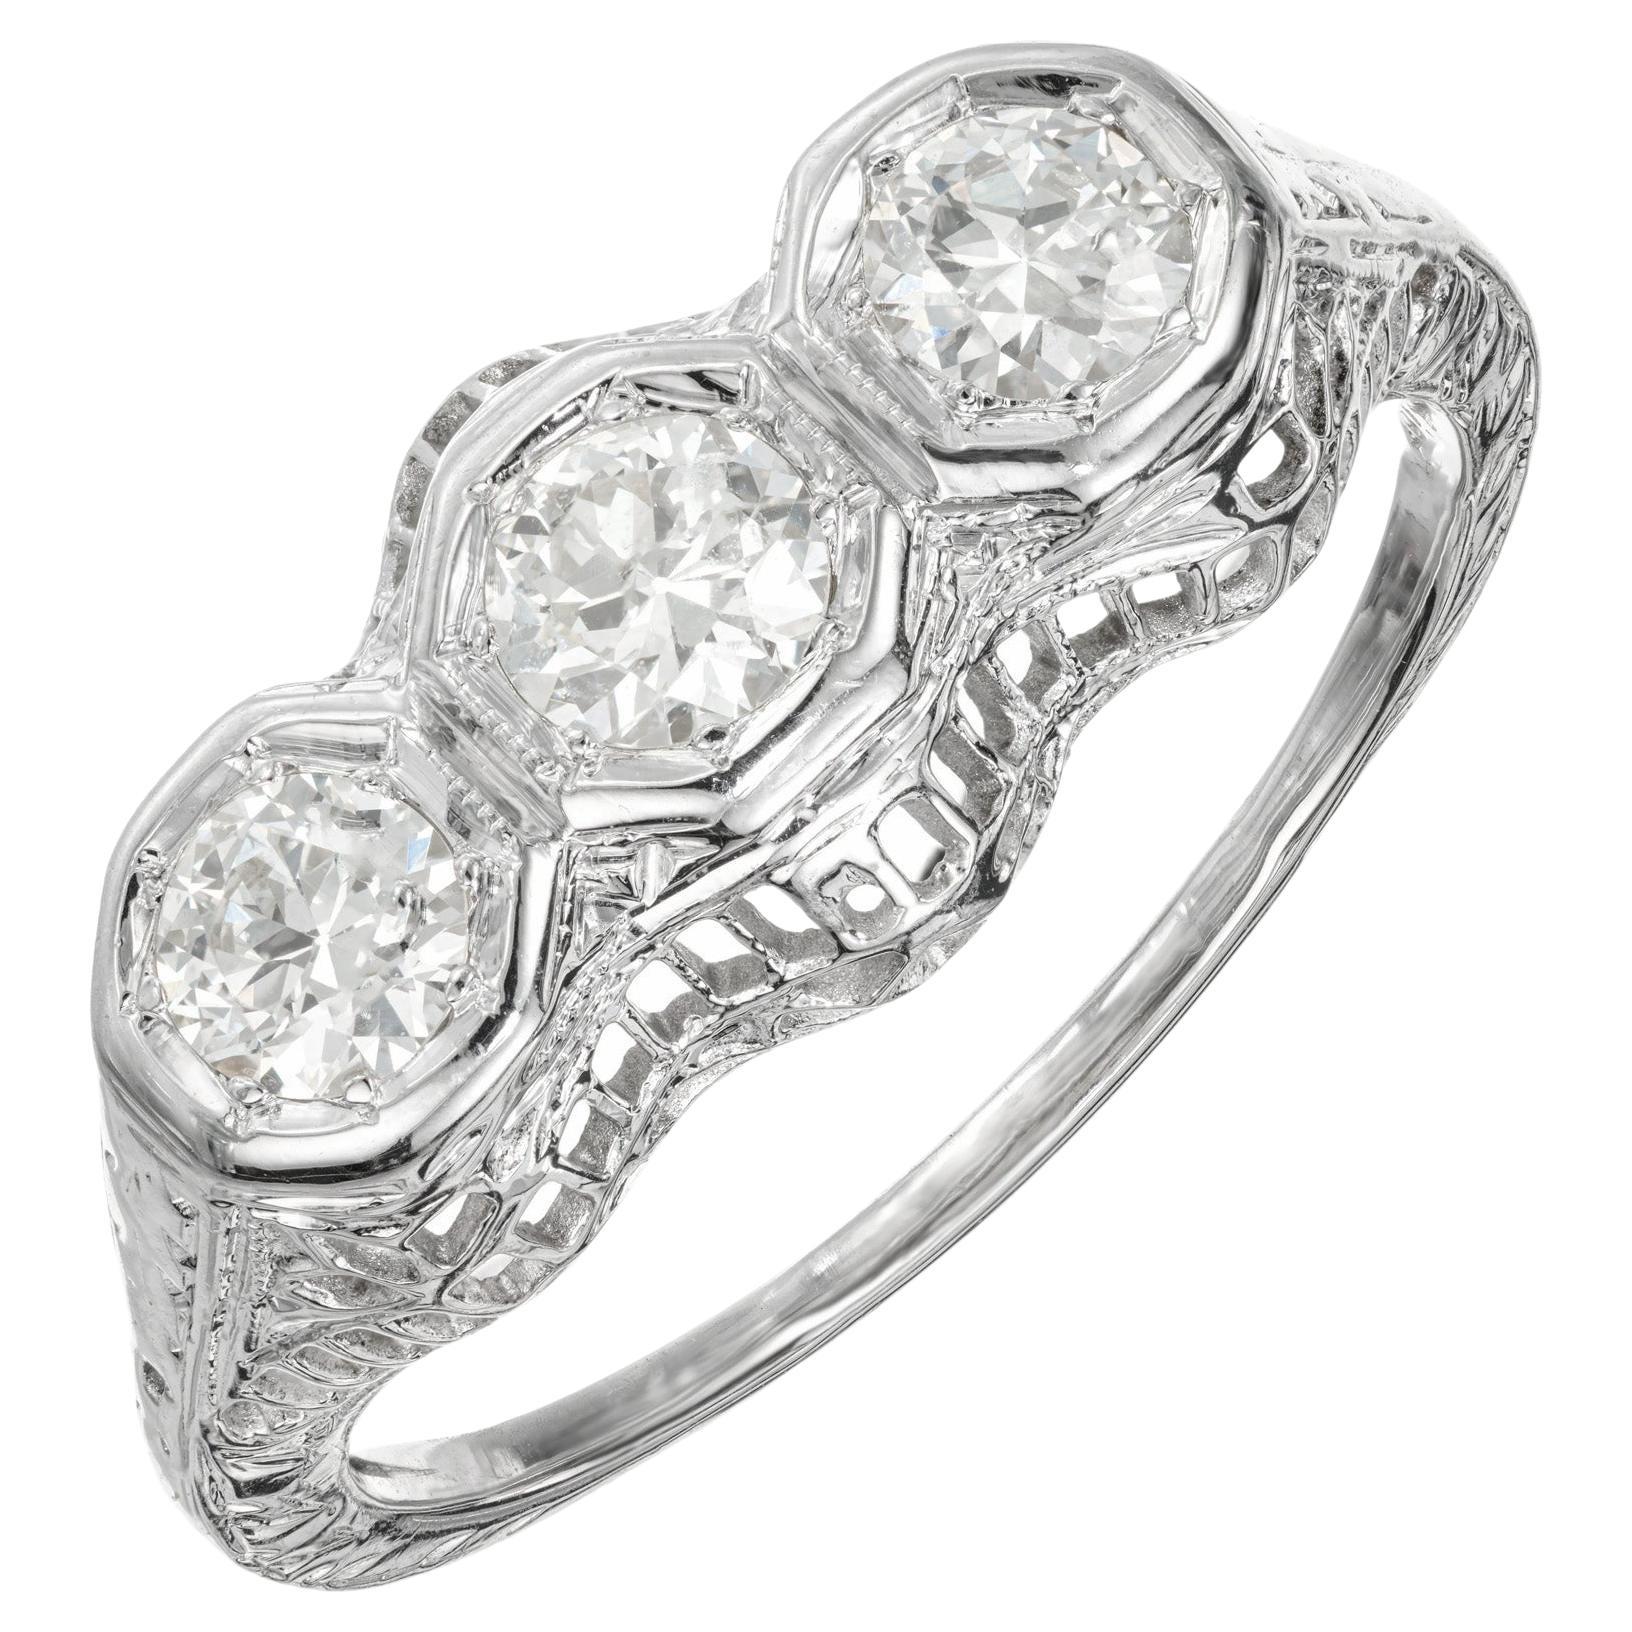  .60 Carat Diamond White Gold Three Stone Ring For Sale